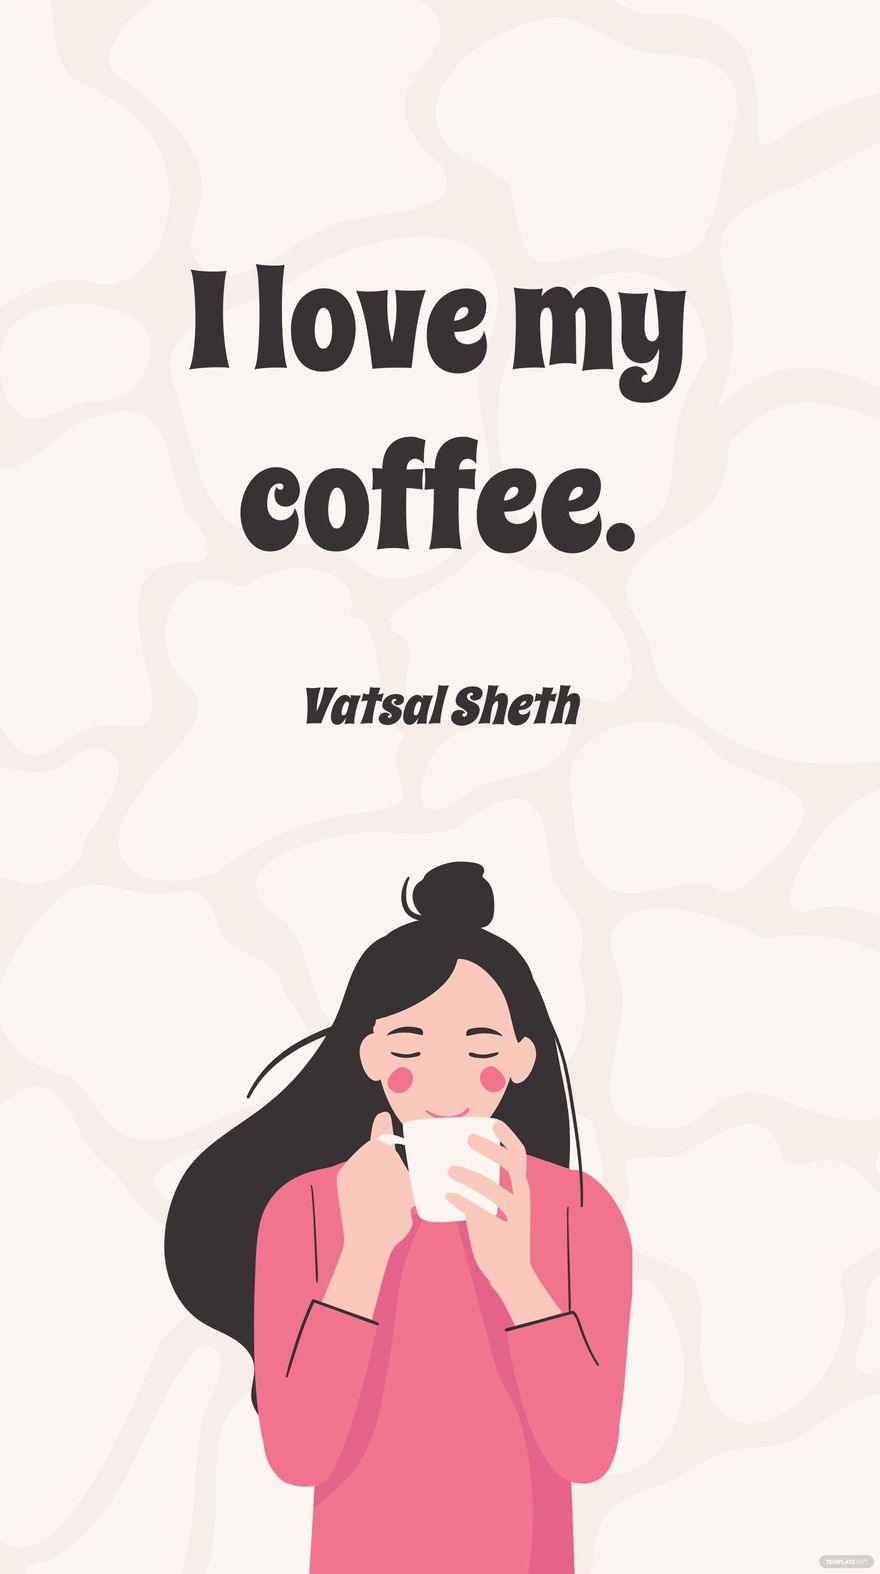 Free Vatsal Sheth - I love my coffee. in JPG